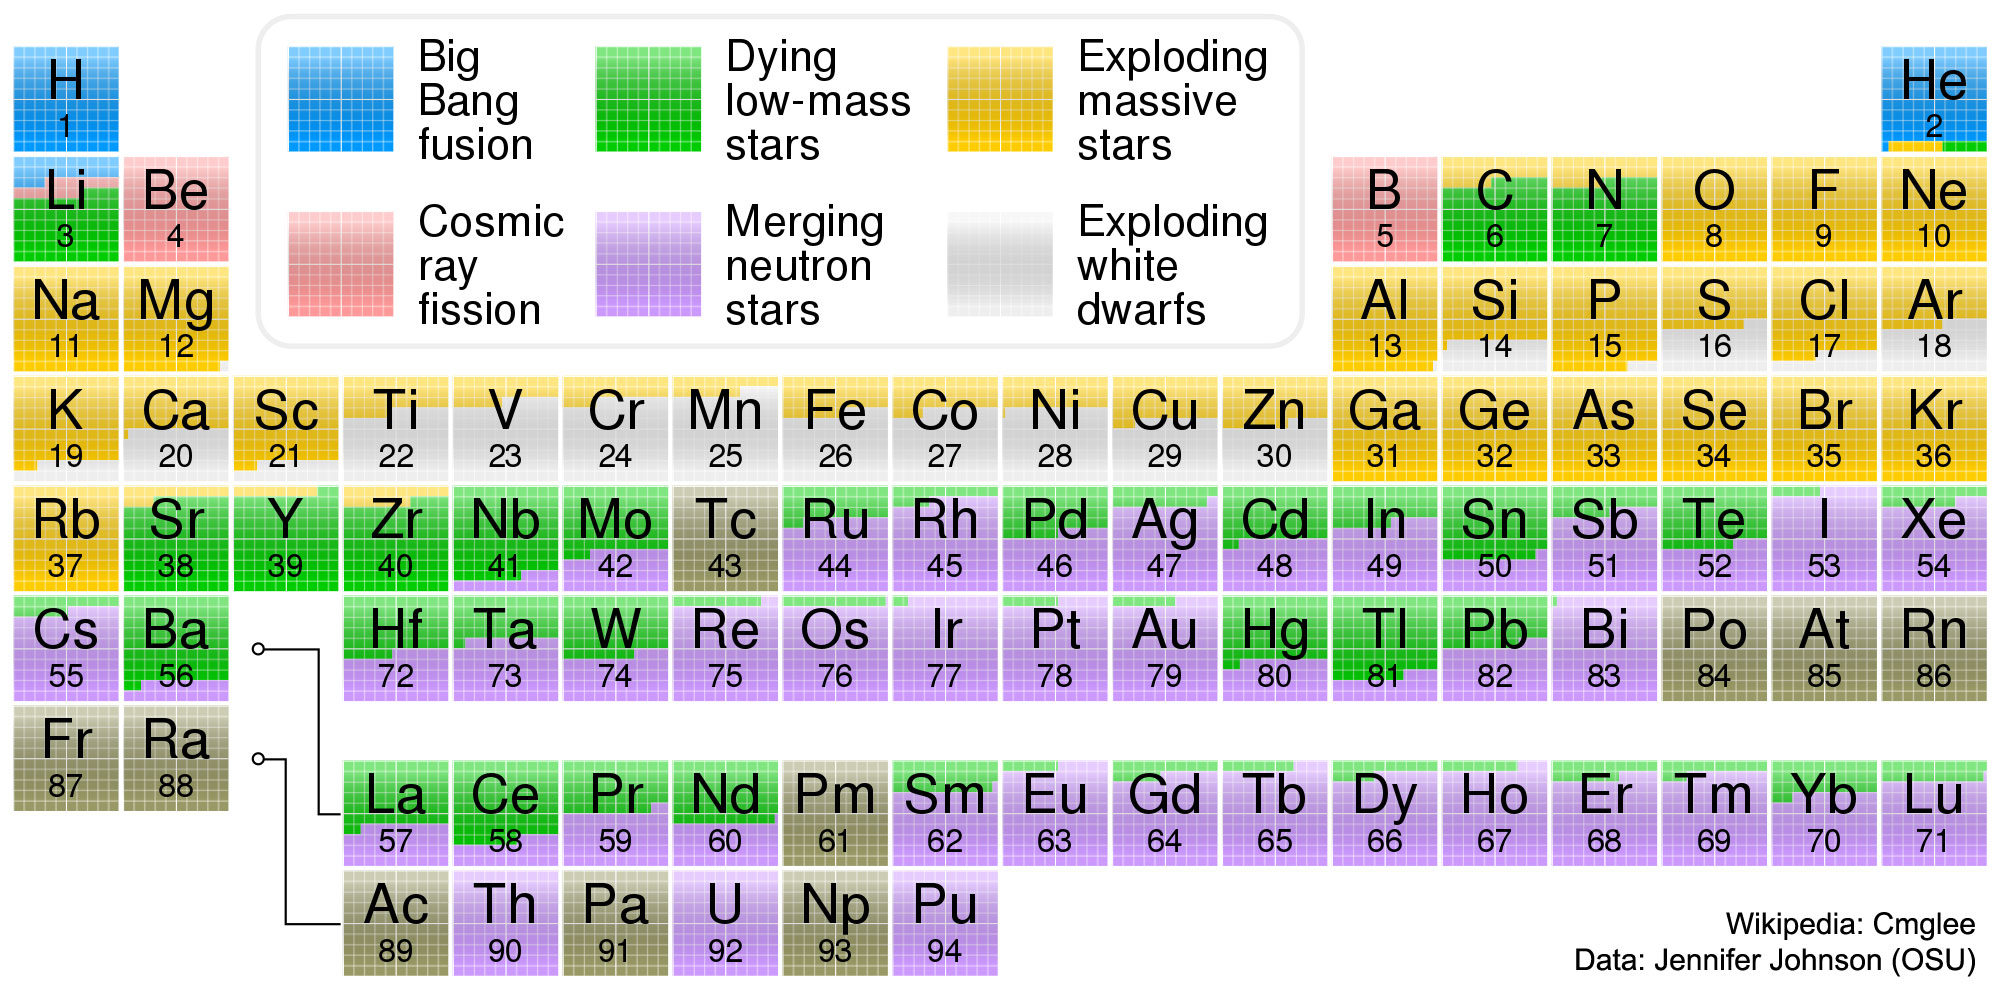 The Origin of Elements